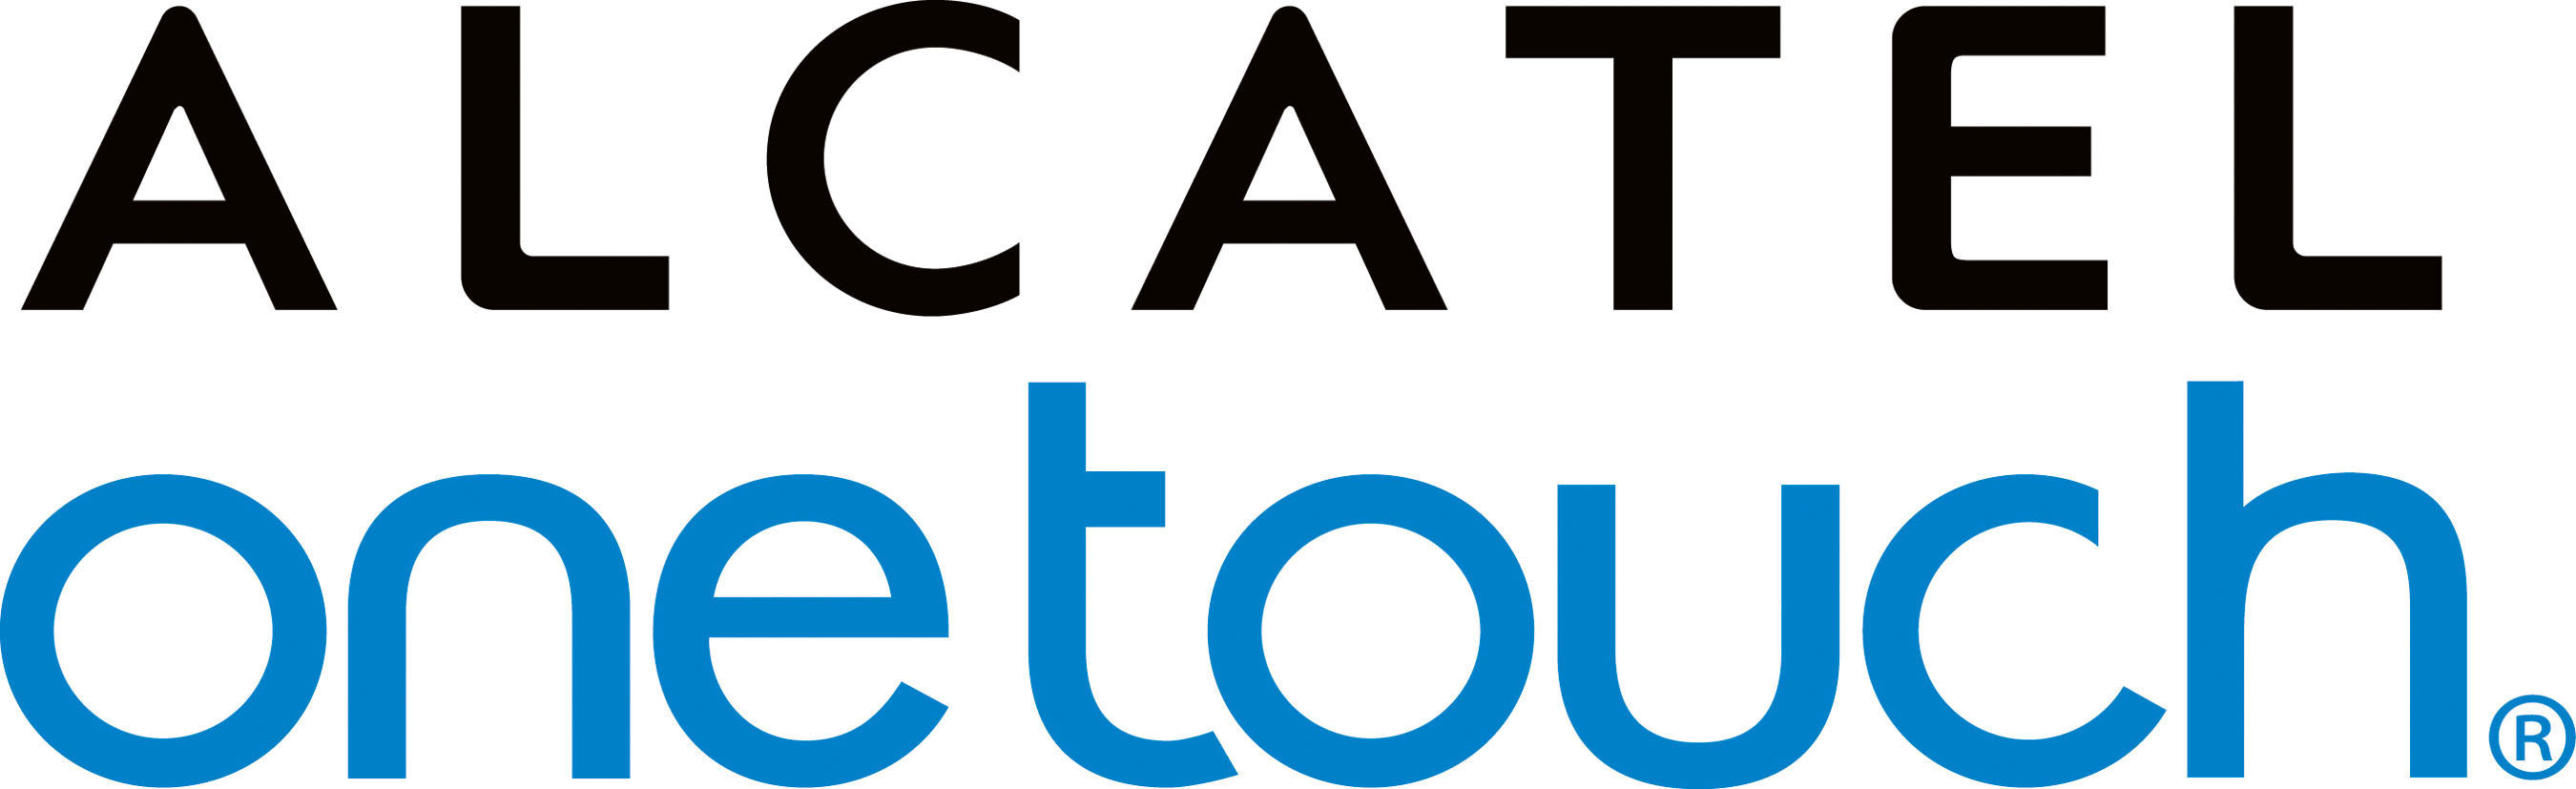 ALCATEL ONETOUCH Logo (PRNewsFoto/ALCATEL ONETOUCH) (PRNewsFoto/ALCATEL ONETOUCH)